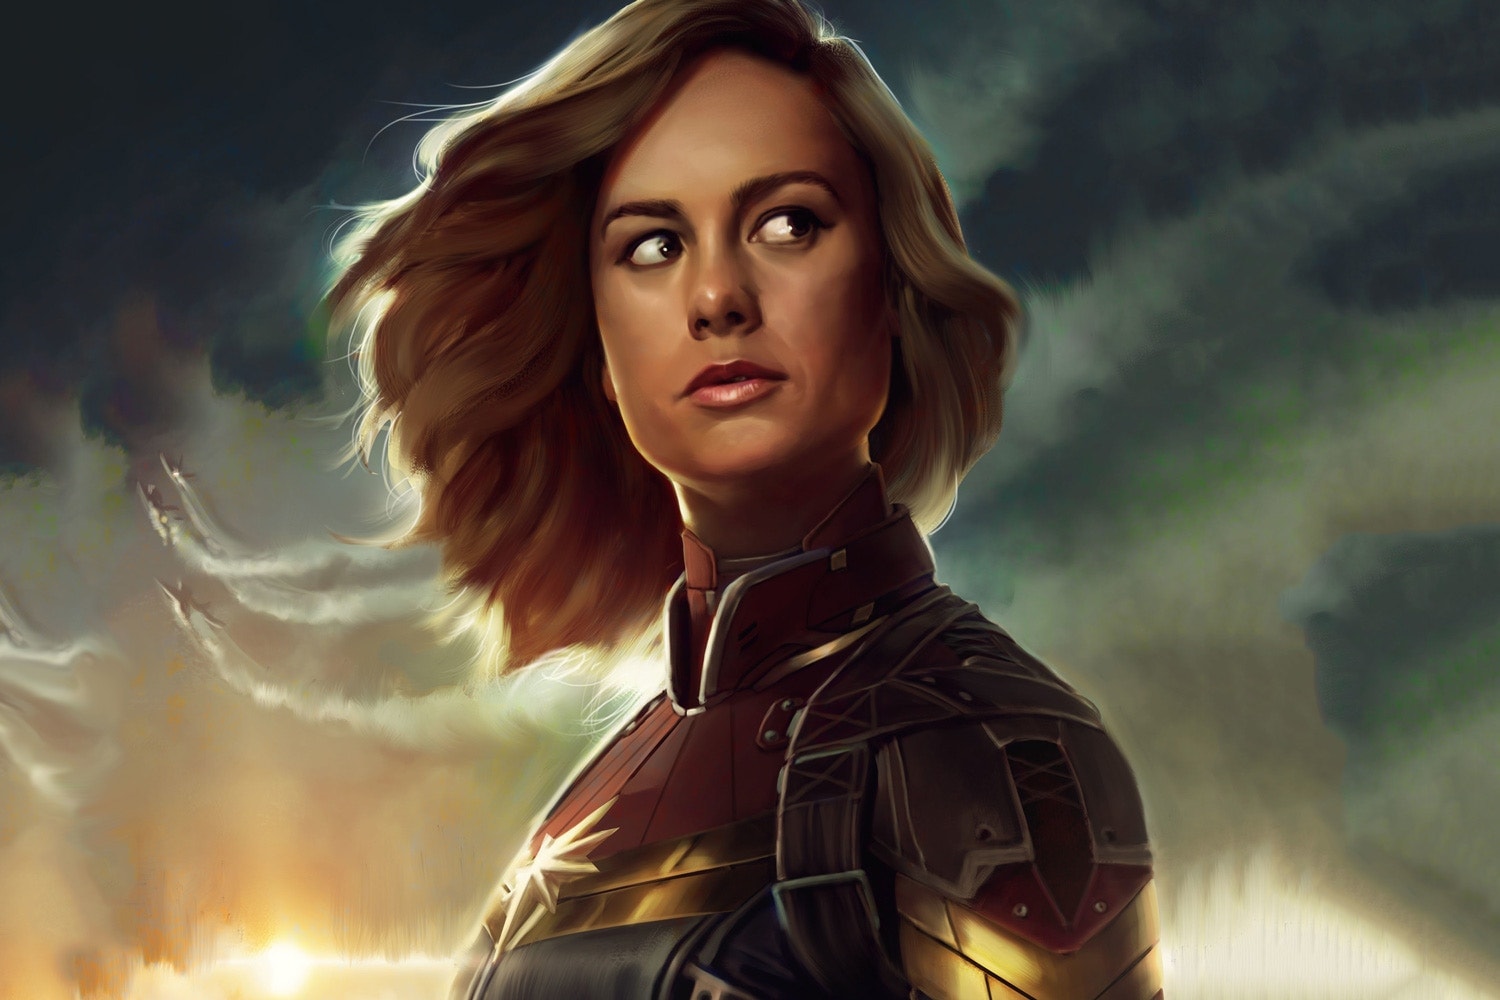 編劇表示 Brie Larson 在開拍《Captain Marvel》前已經拍攝《Avengers 4》